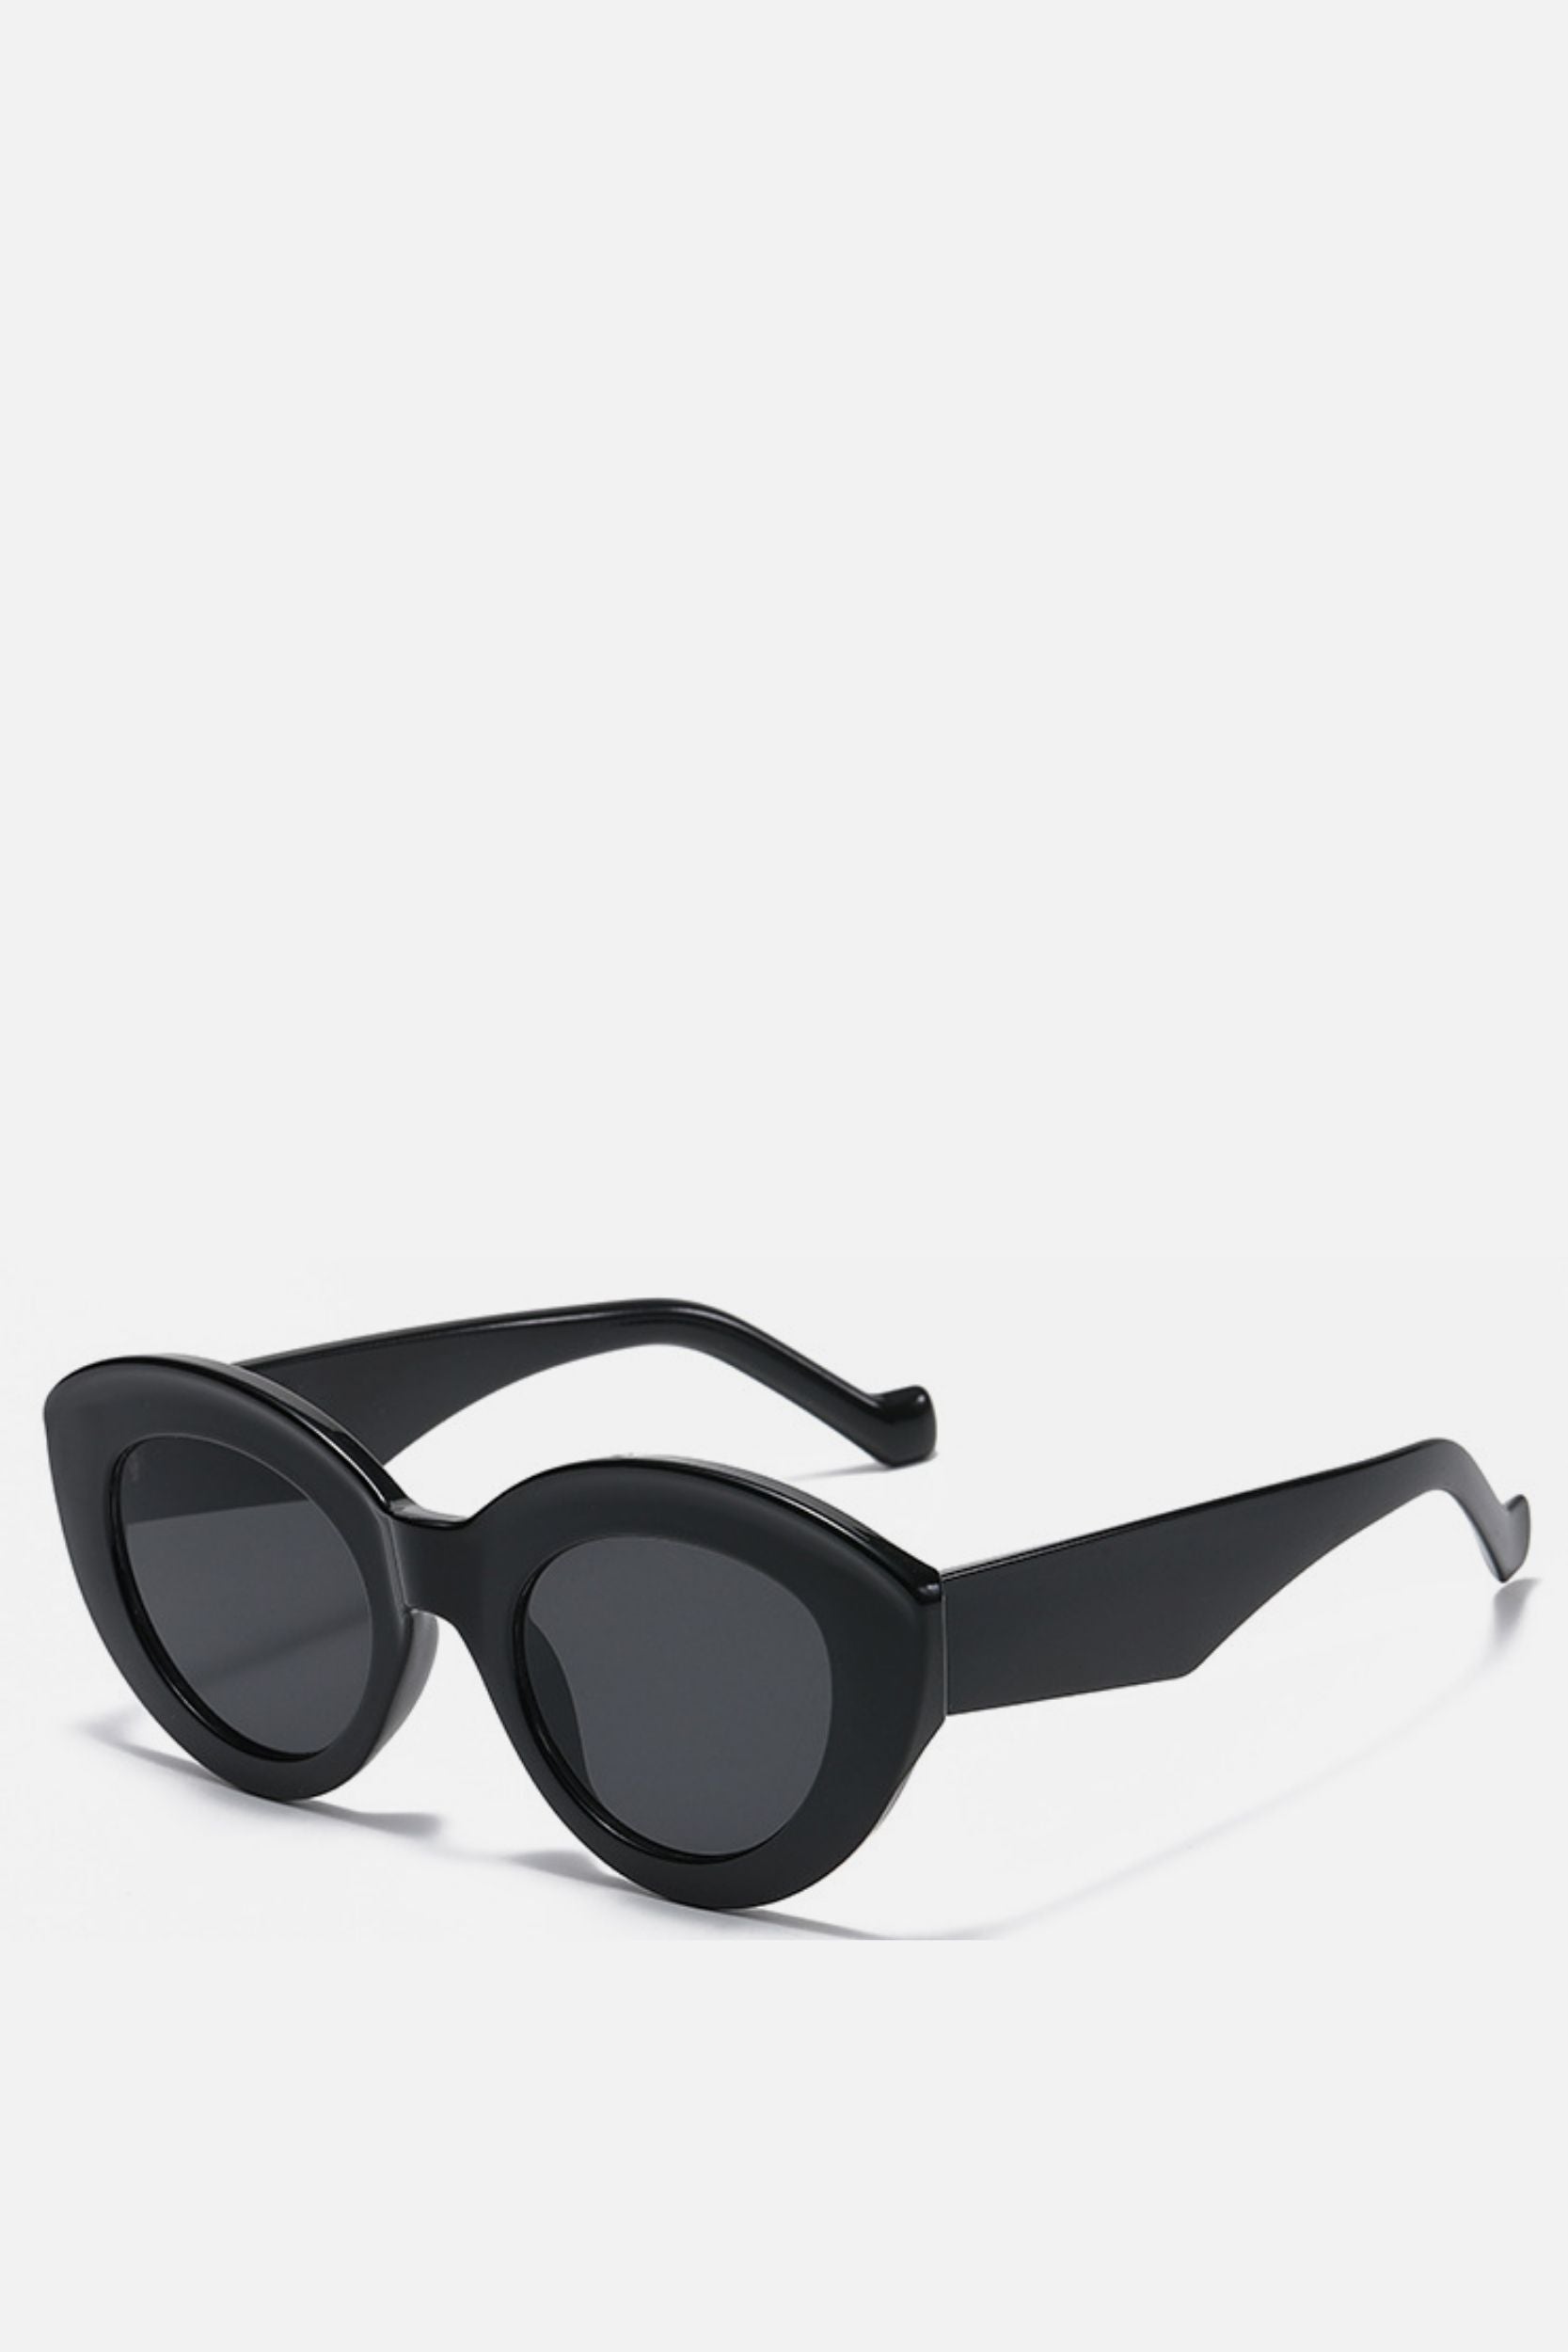 RAVELLO Round Black Sunglasses